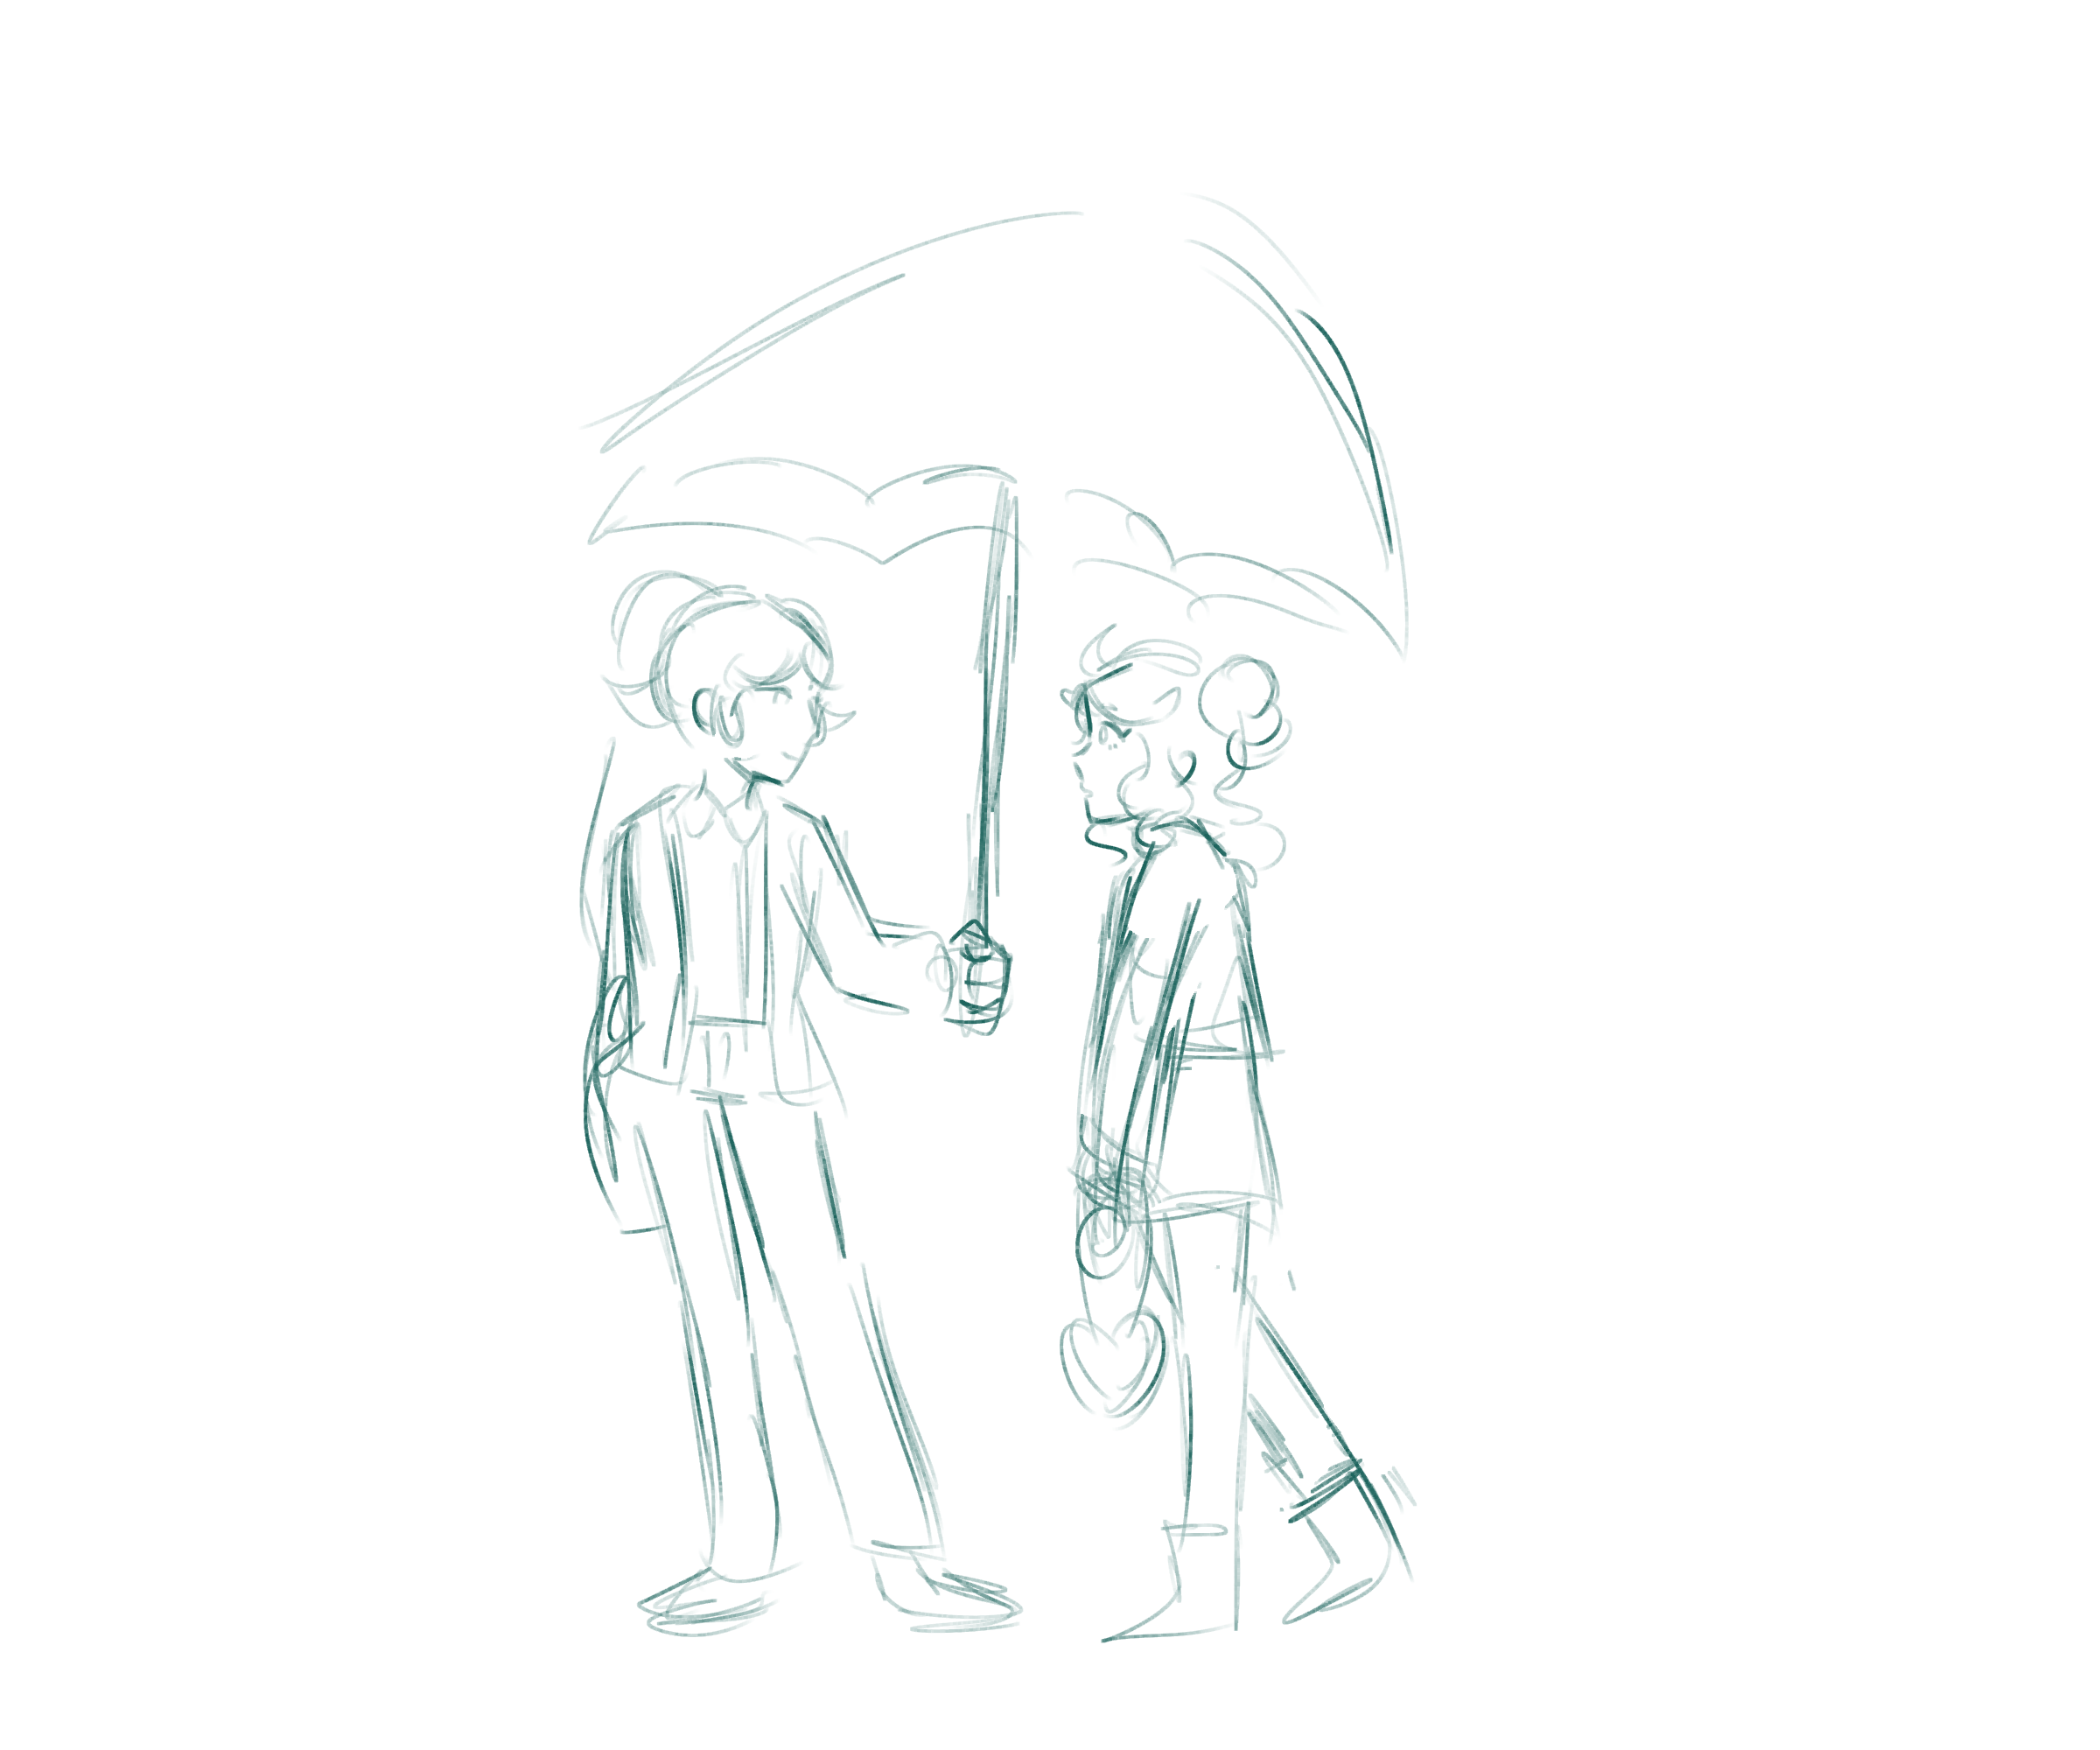 umbrella scene redraw.png